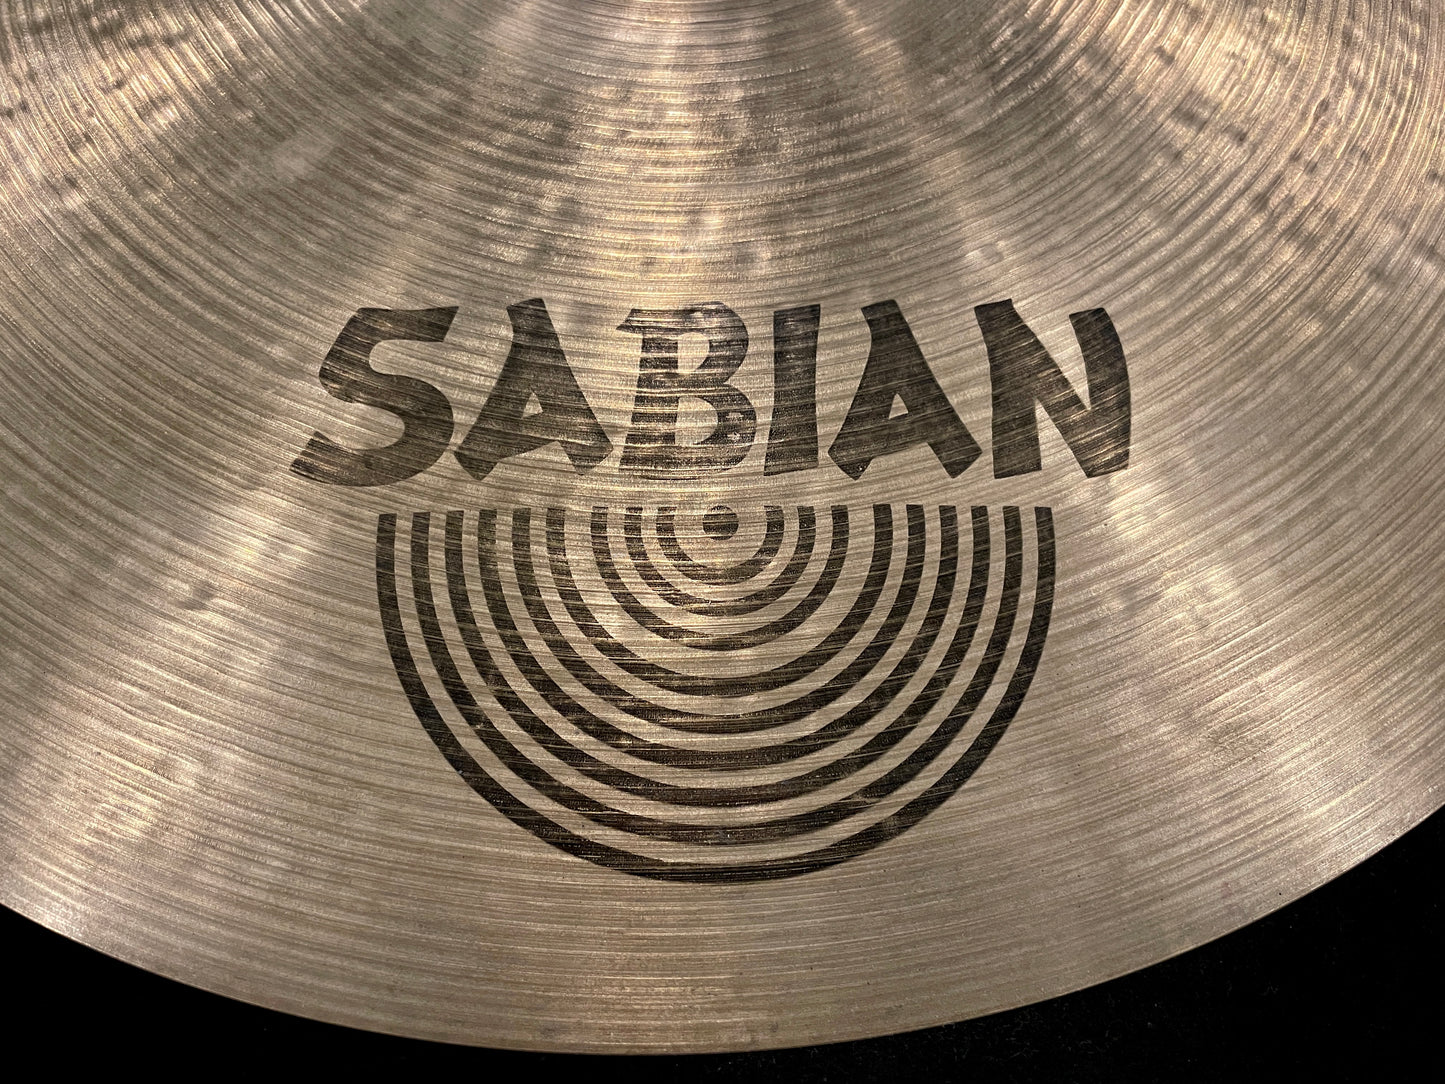 20" Sabian HH Hand Hammered Medium Ride Cymbal 2606g *Video Demo*